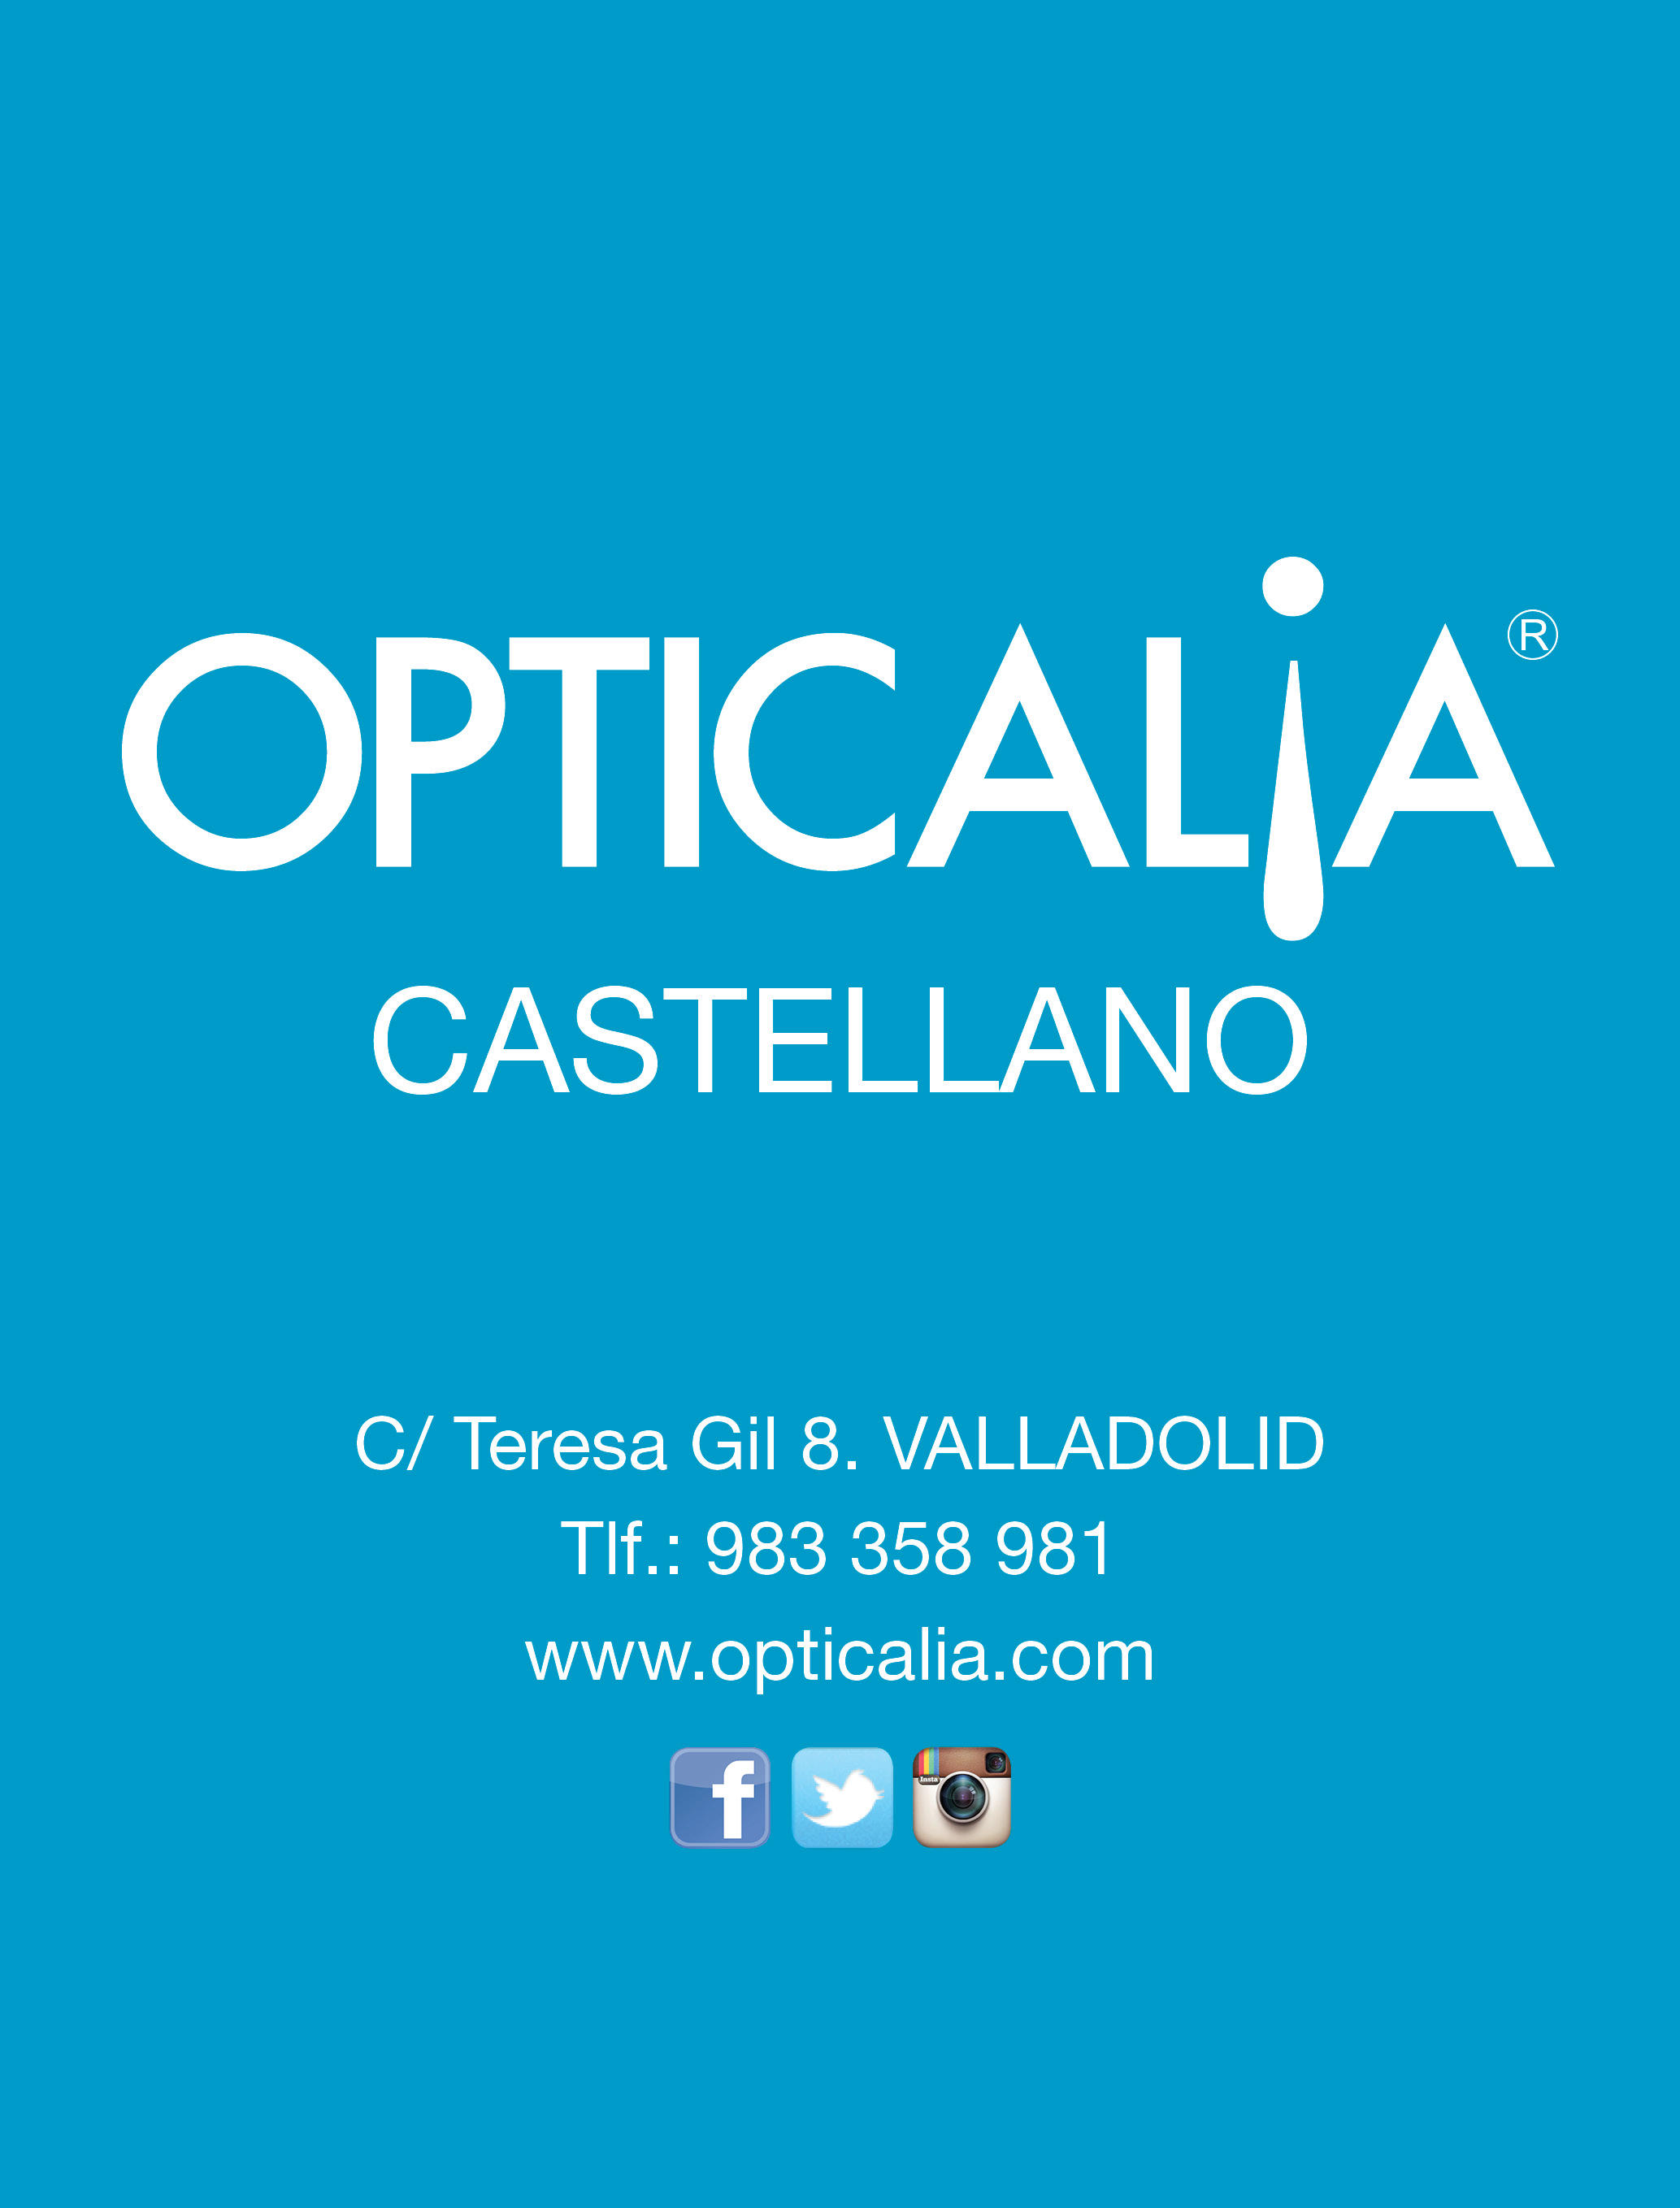 Images Opticalia Castellano